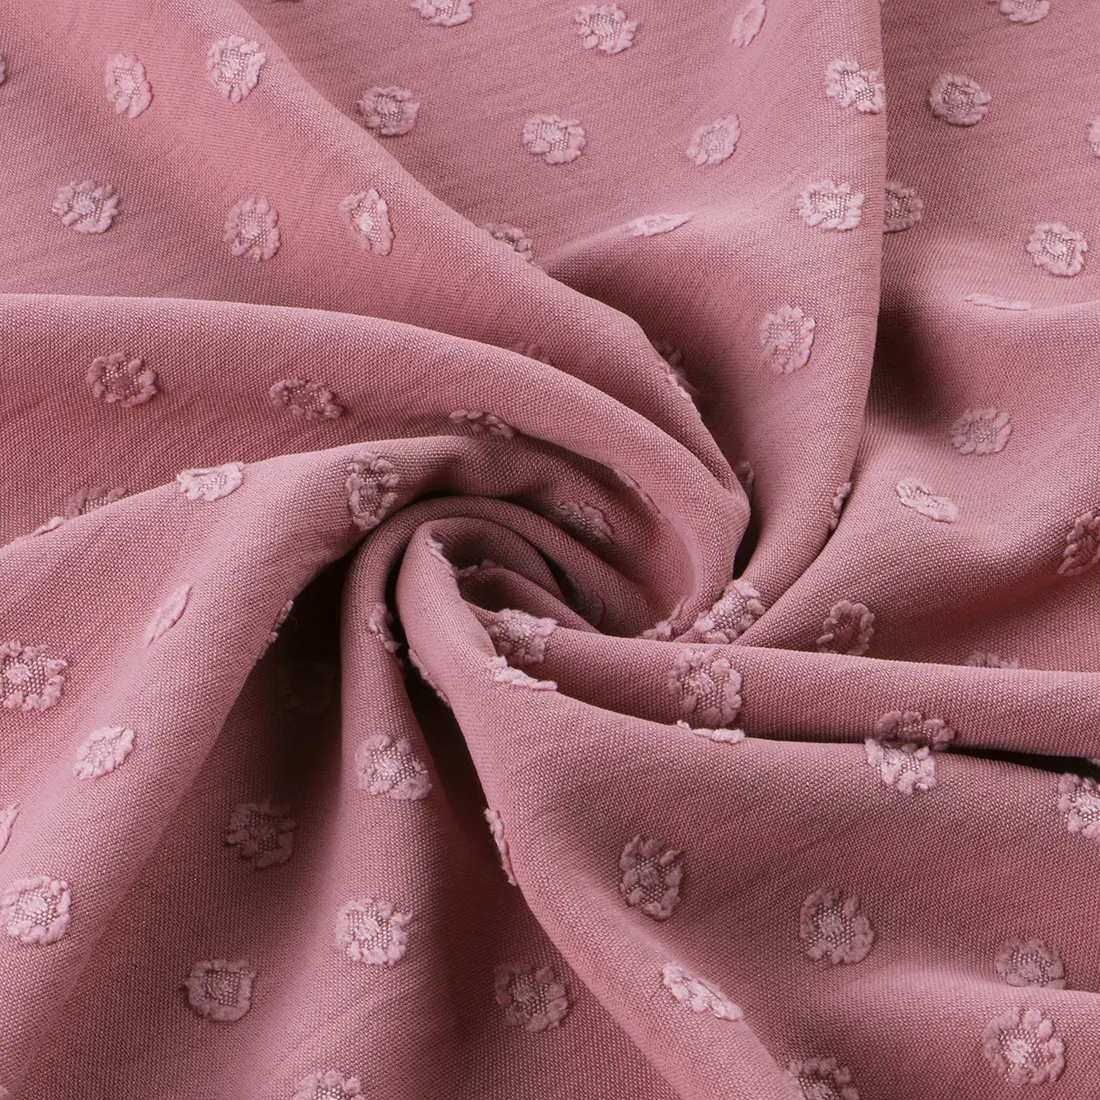 Solf Linen CEY 100% Polyester Polka Dot Dobby Chiffon Fabric 4way Stretch Air Flow For Abaya